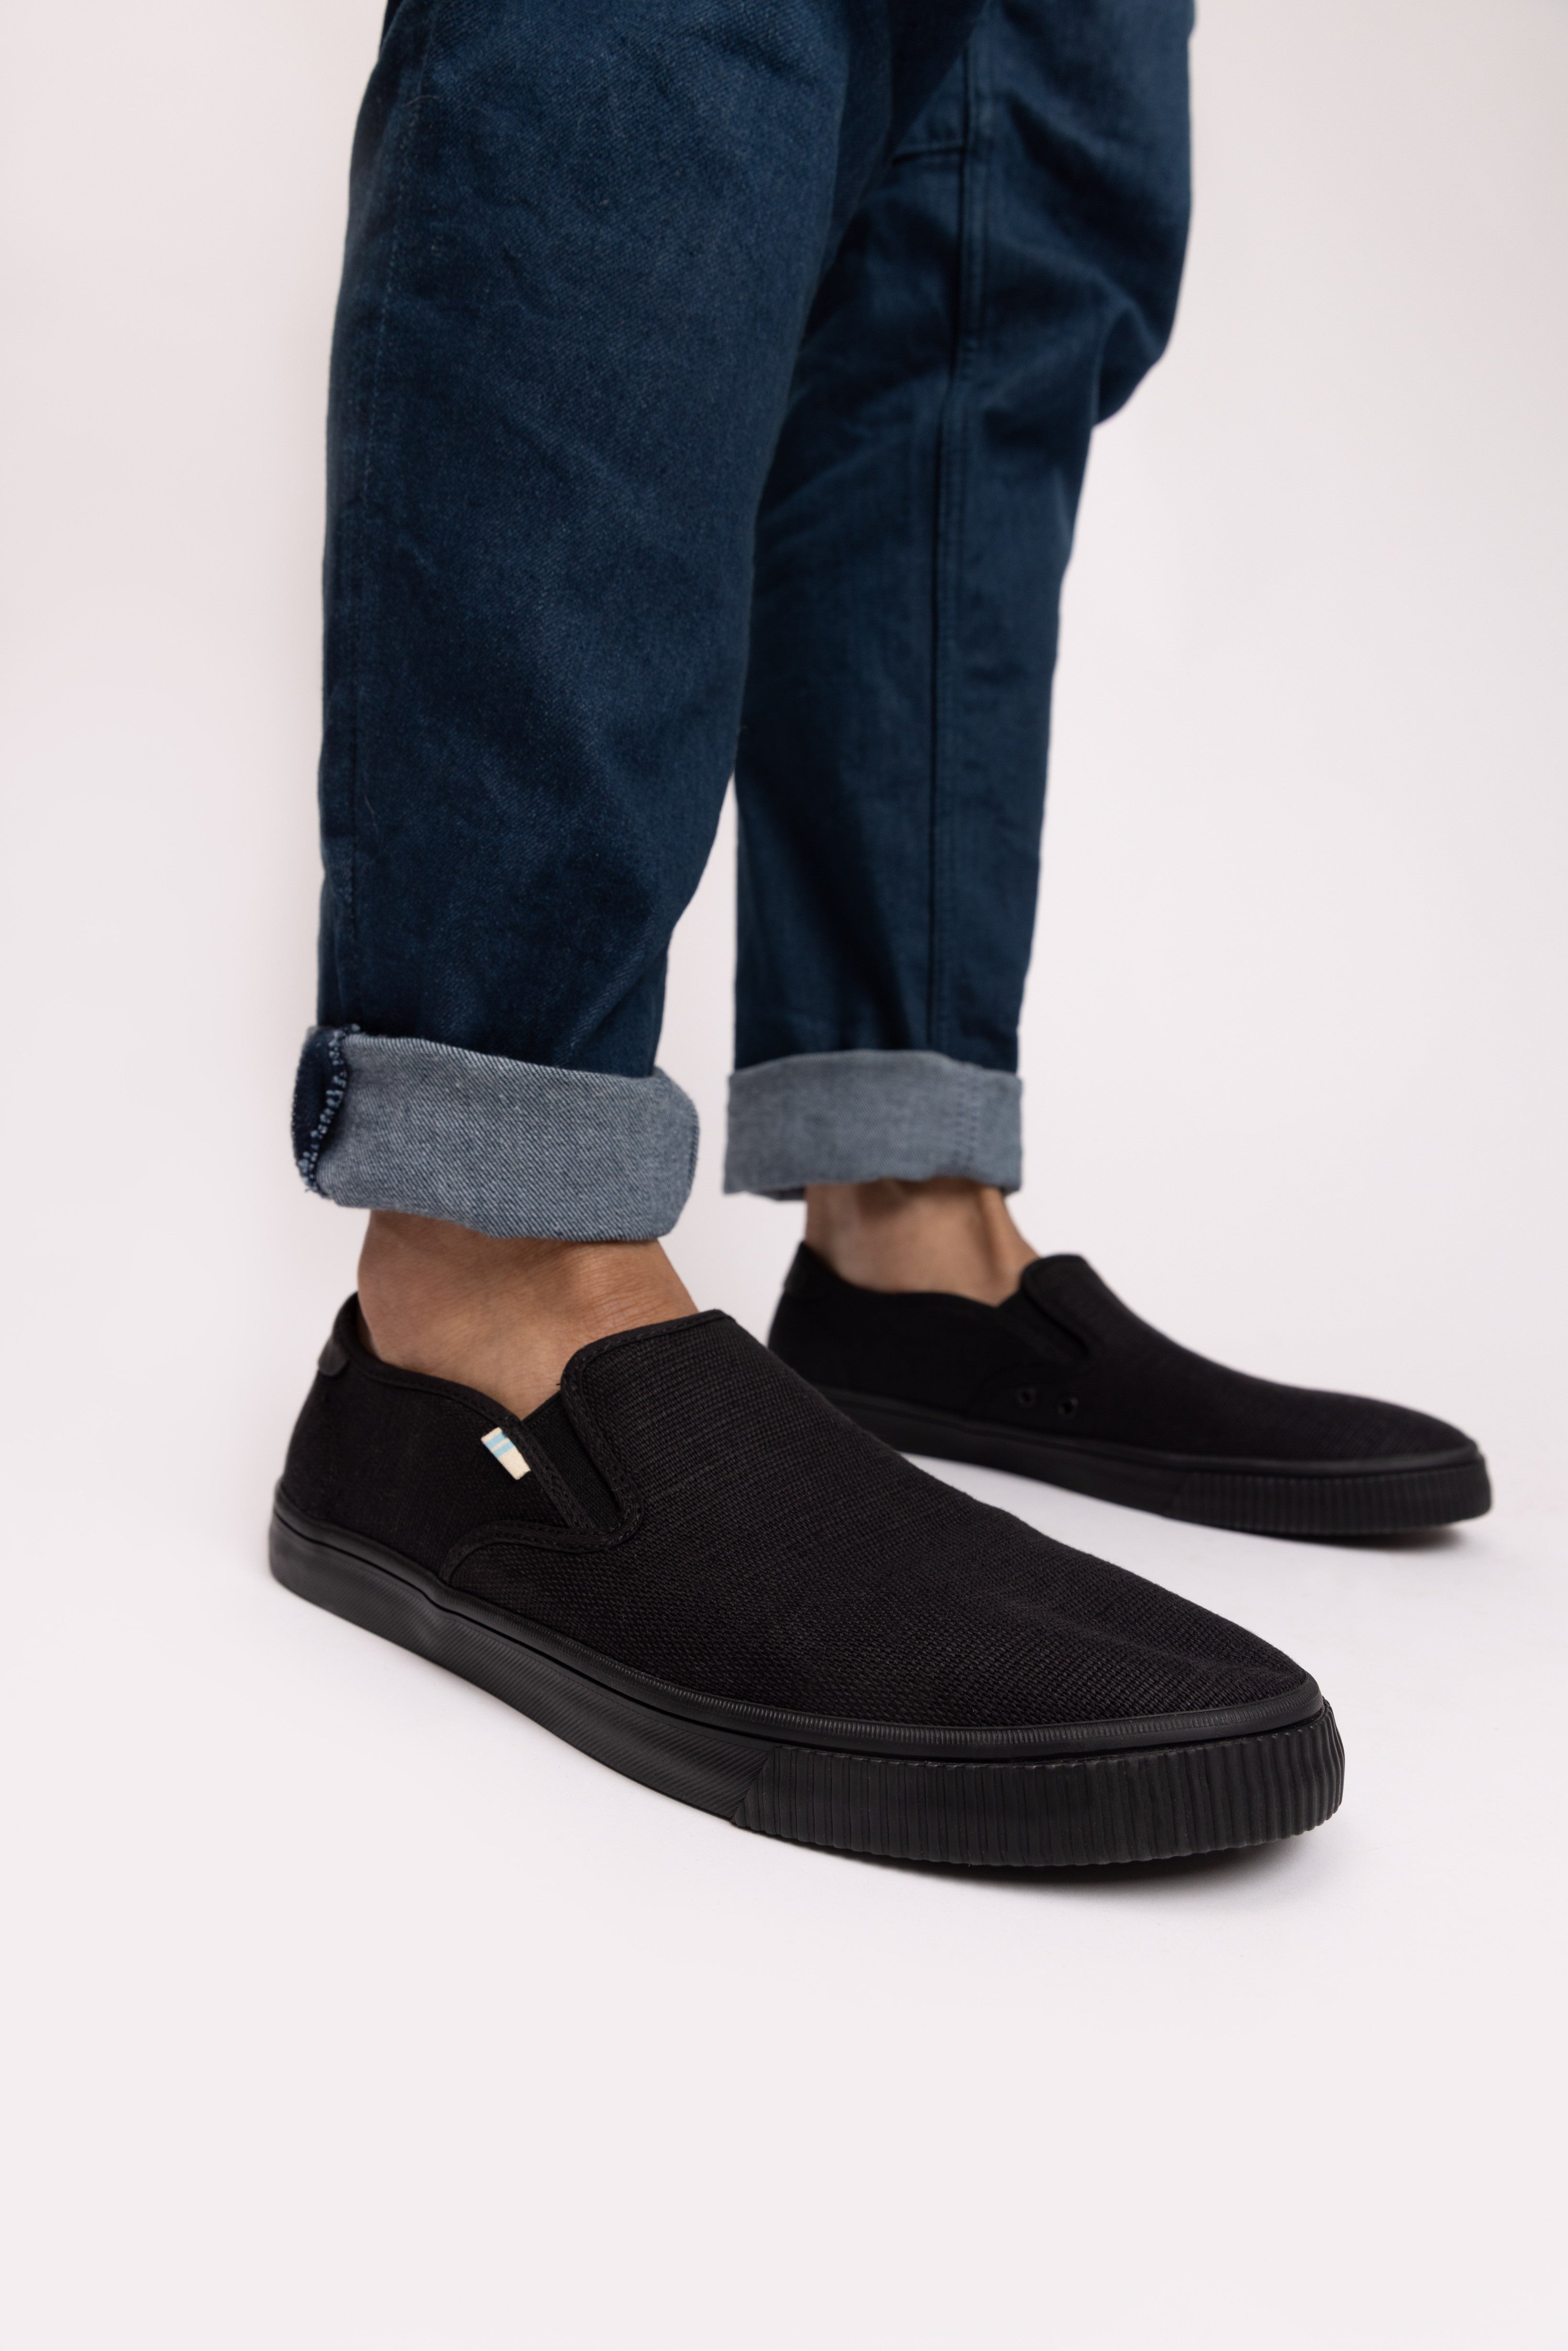 PUMA-180 corduroy sneakers in gray and black | ASOS